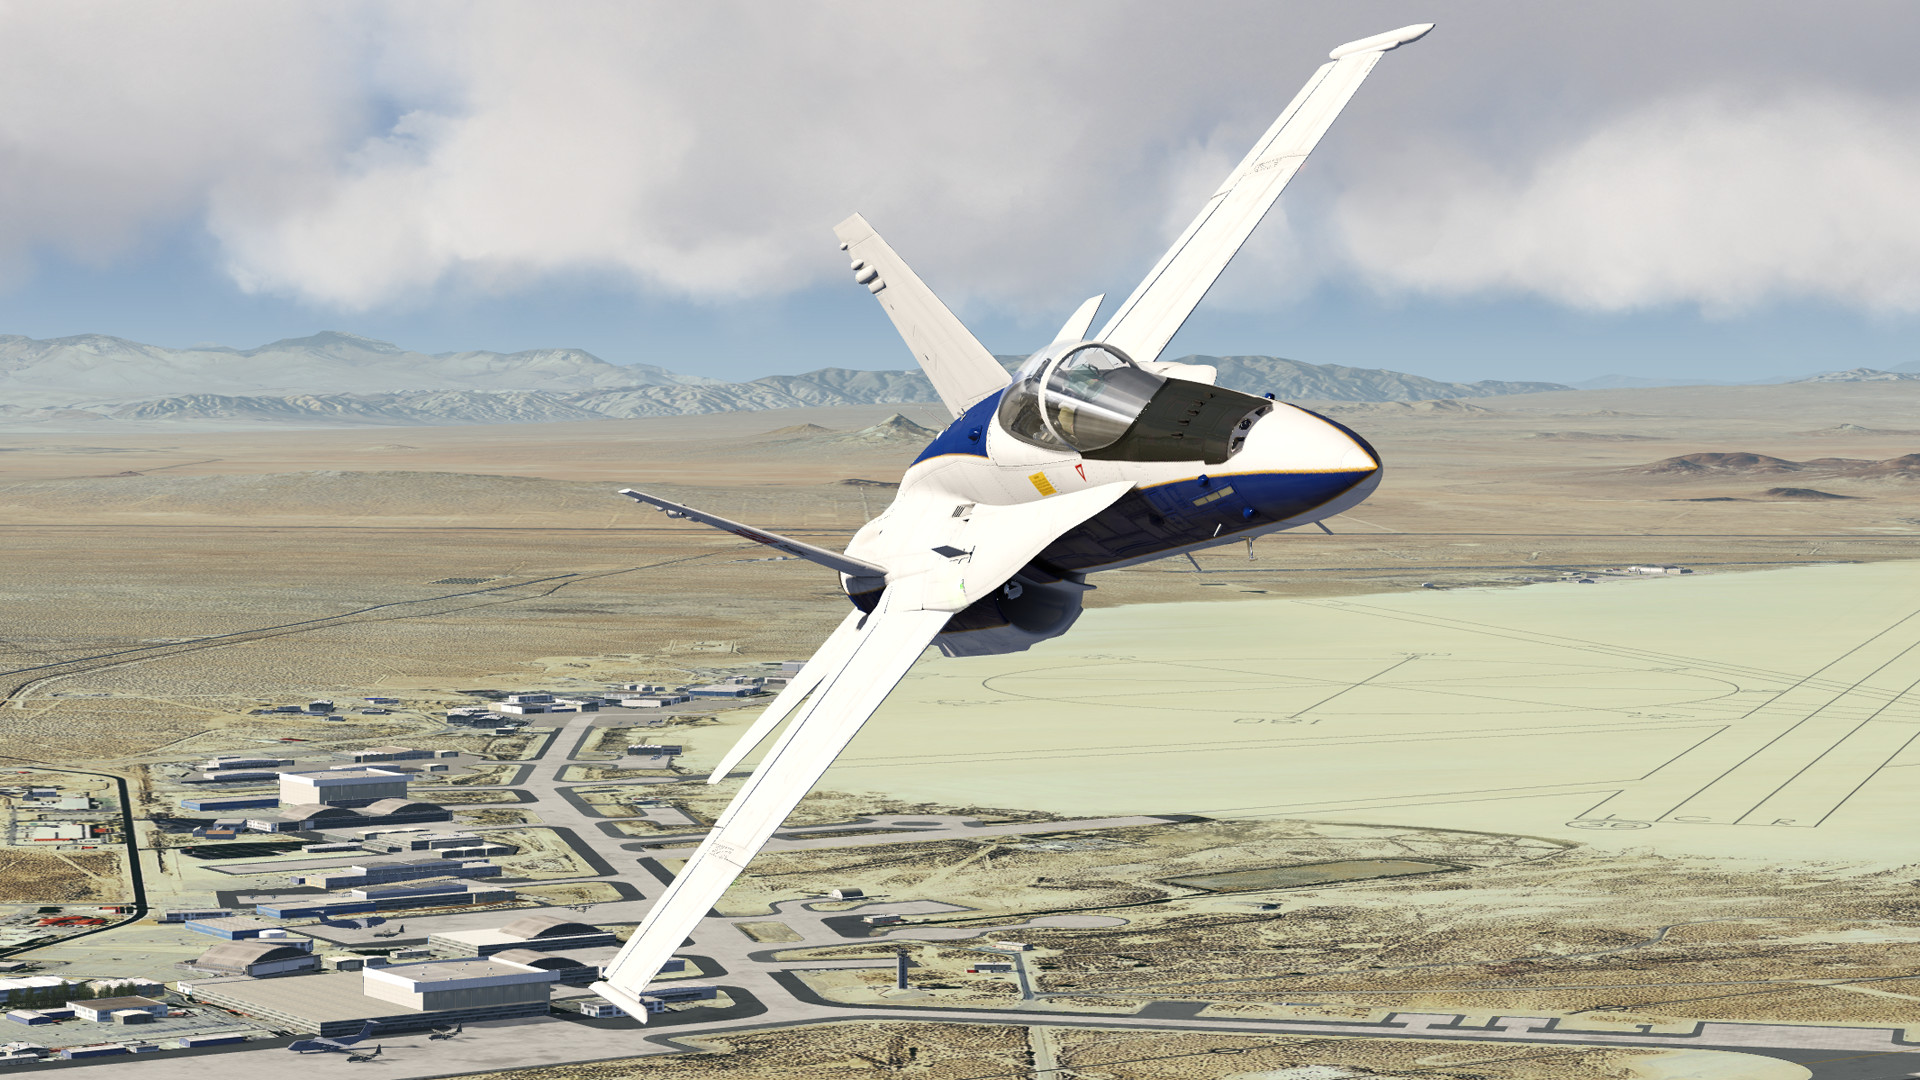 aerofly fms simulator download